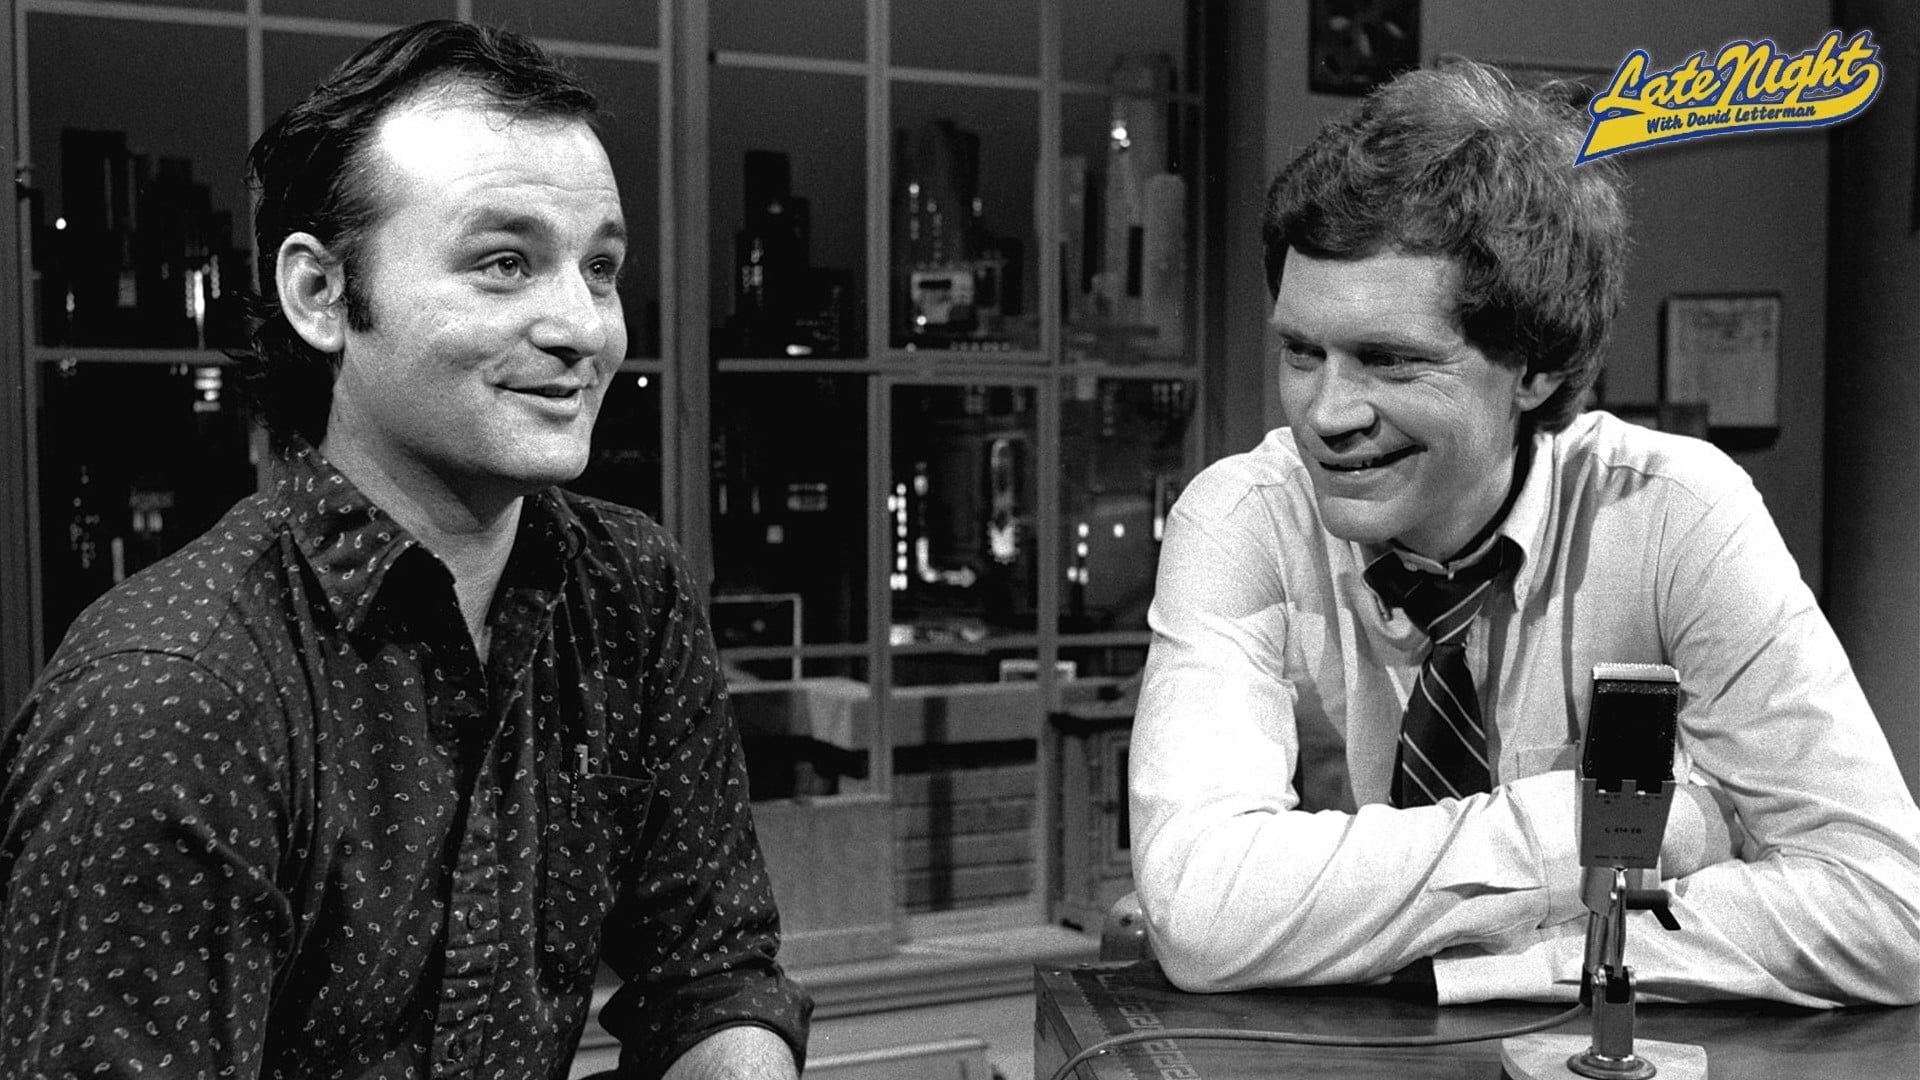 Late Night with David Letterman - Staffel 11 (1970)